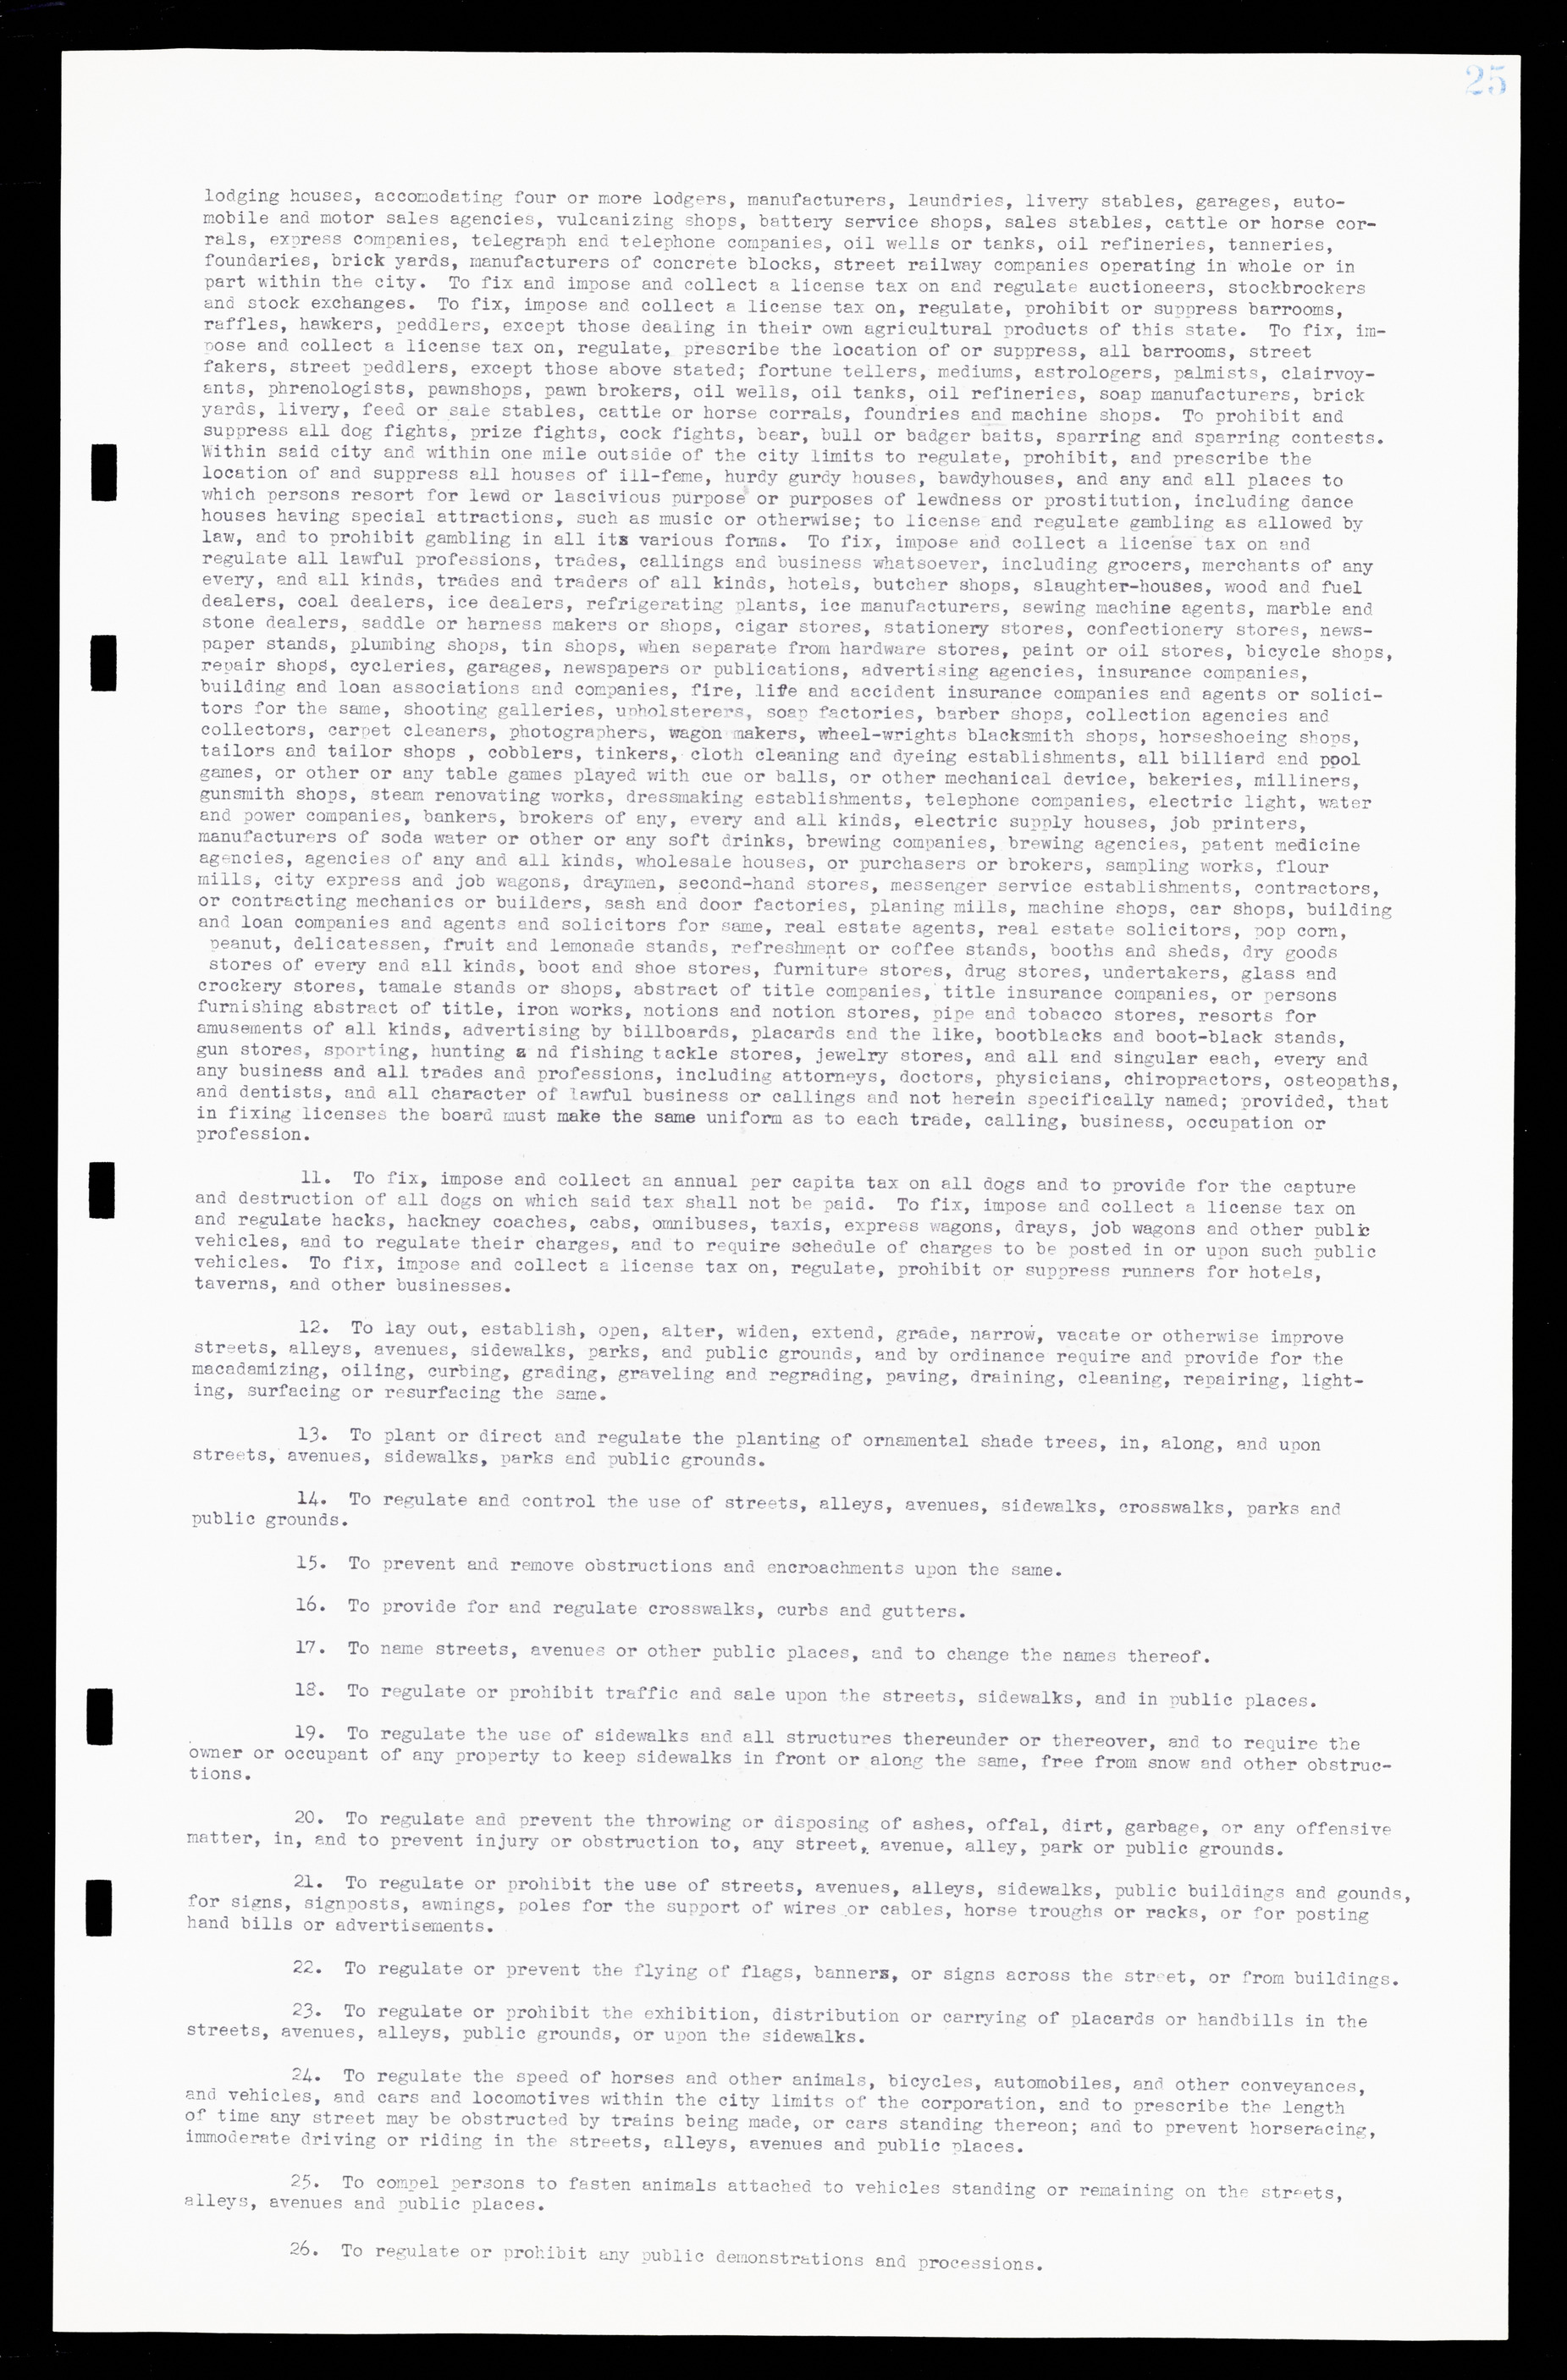 Las Vegas City Commission Minutes, February 17, 1937 to August 4, 1942, lvc000004-31